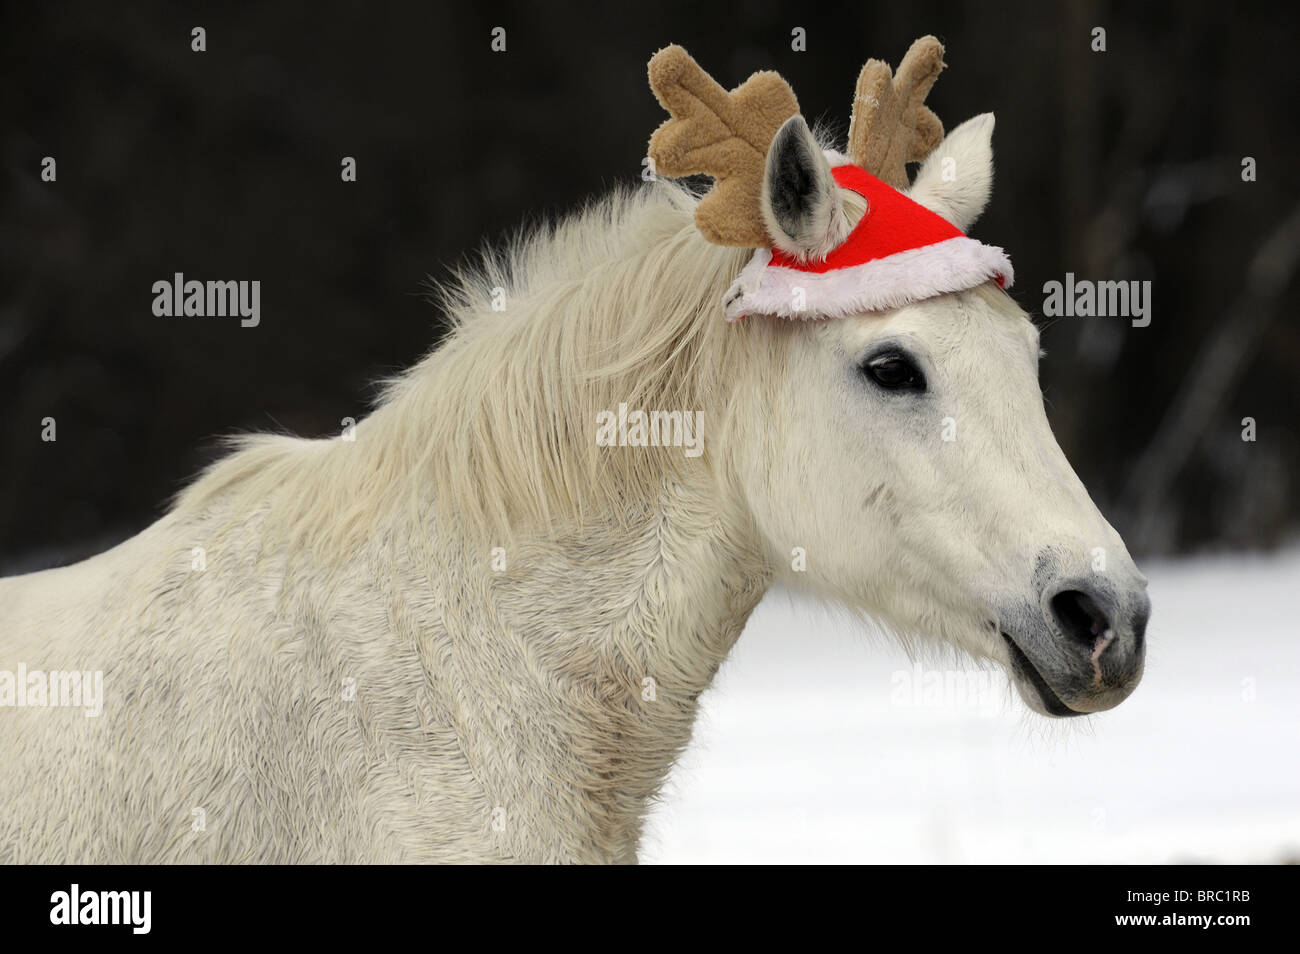 Caballo doméstico (Equus caballus ferus). Caballo gris sobre una pastura wearing reindeer cap. Foto de stock